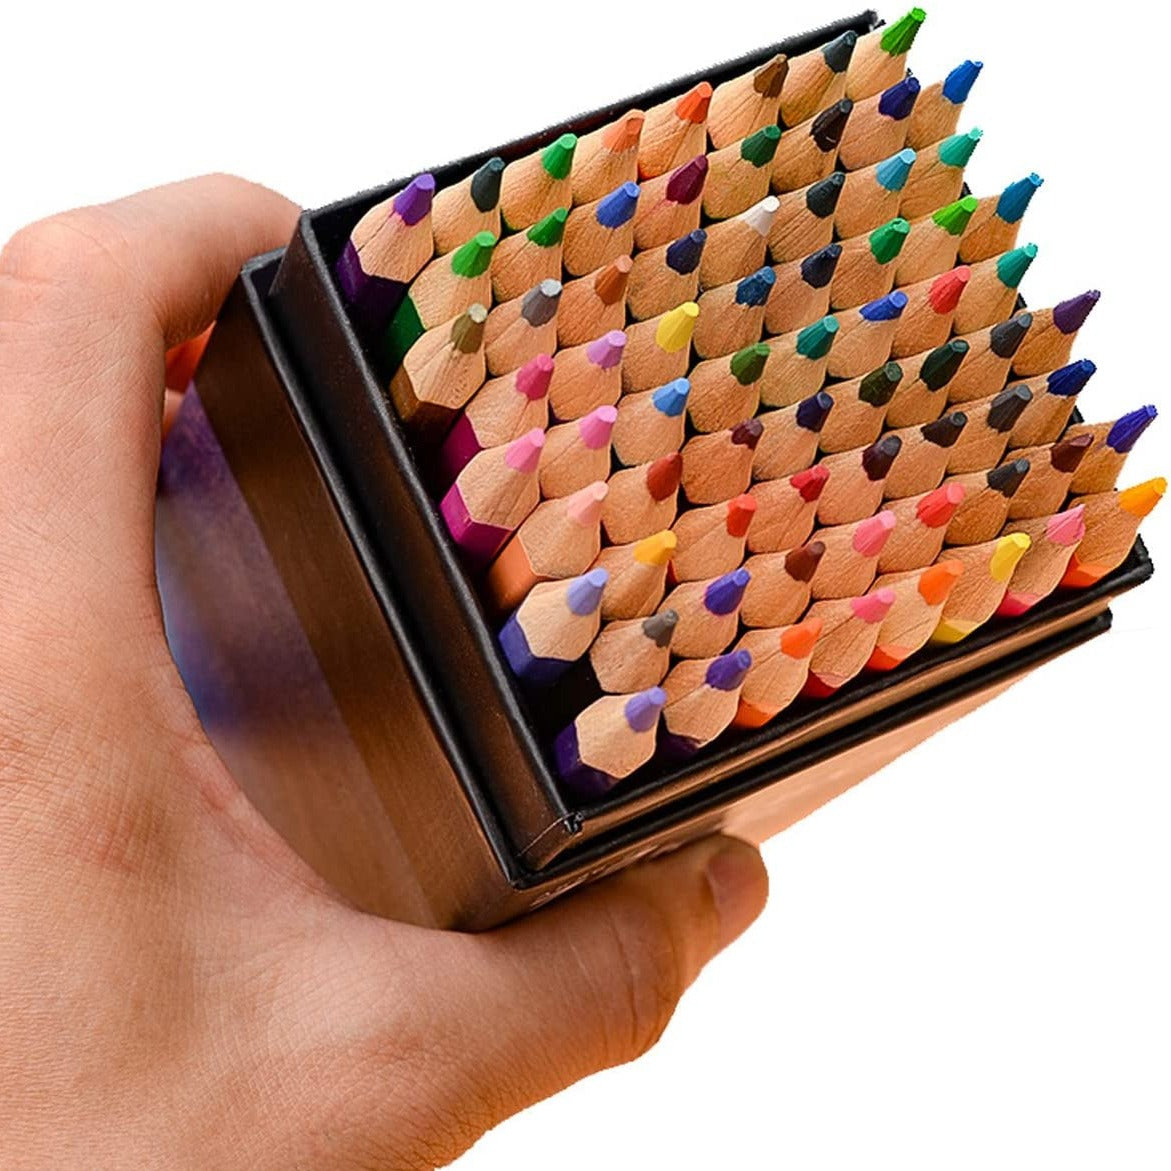 Oil Based Color Pencils.